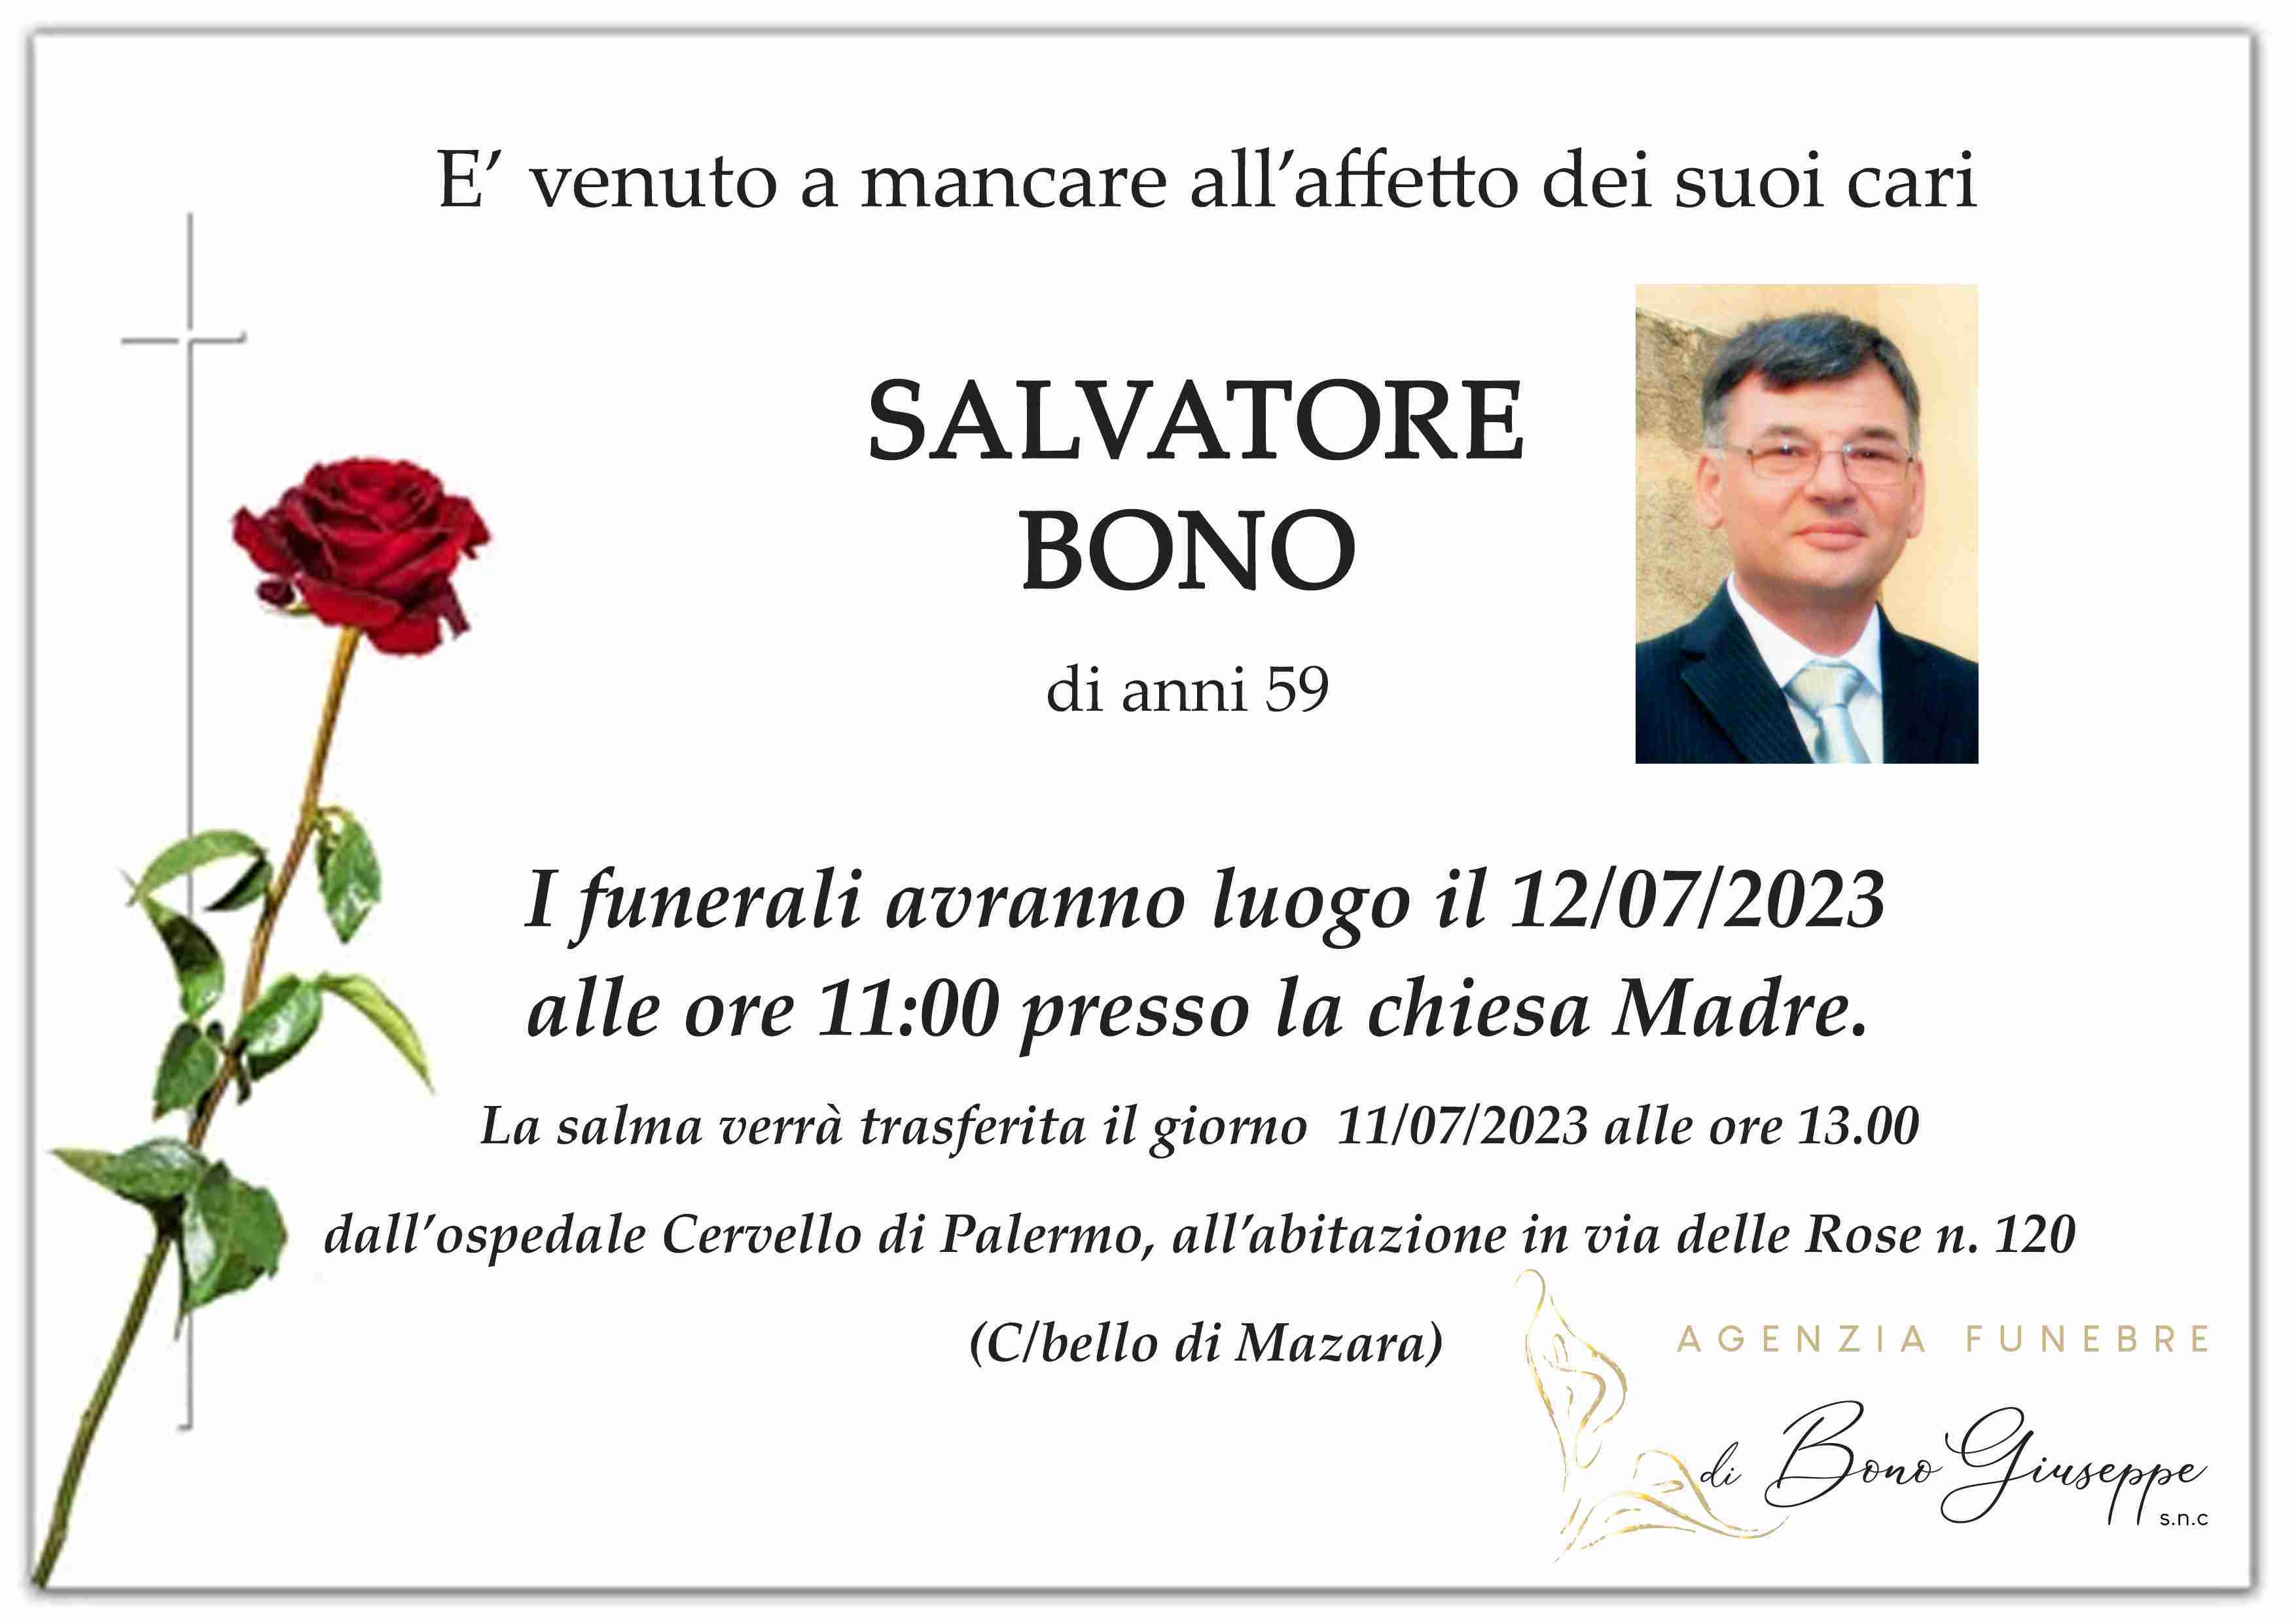 Salvatore Bono